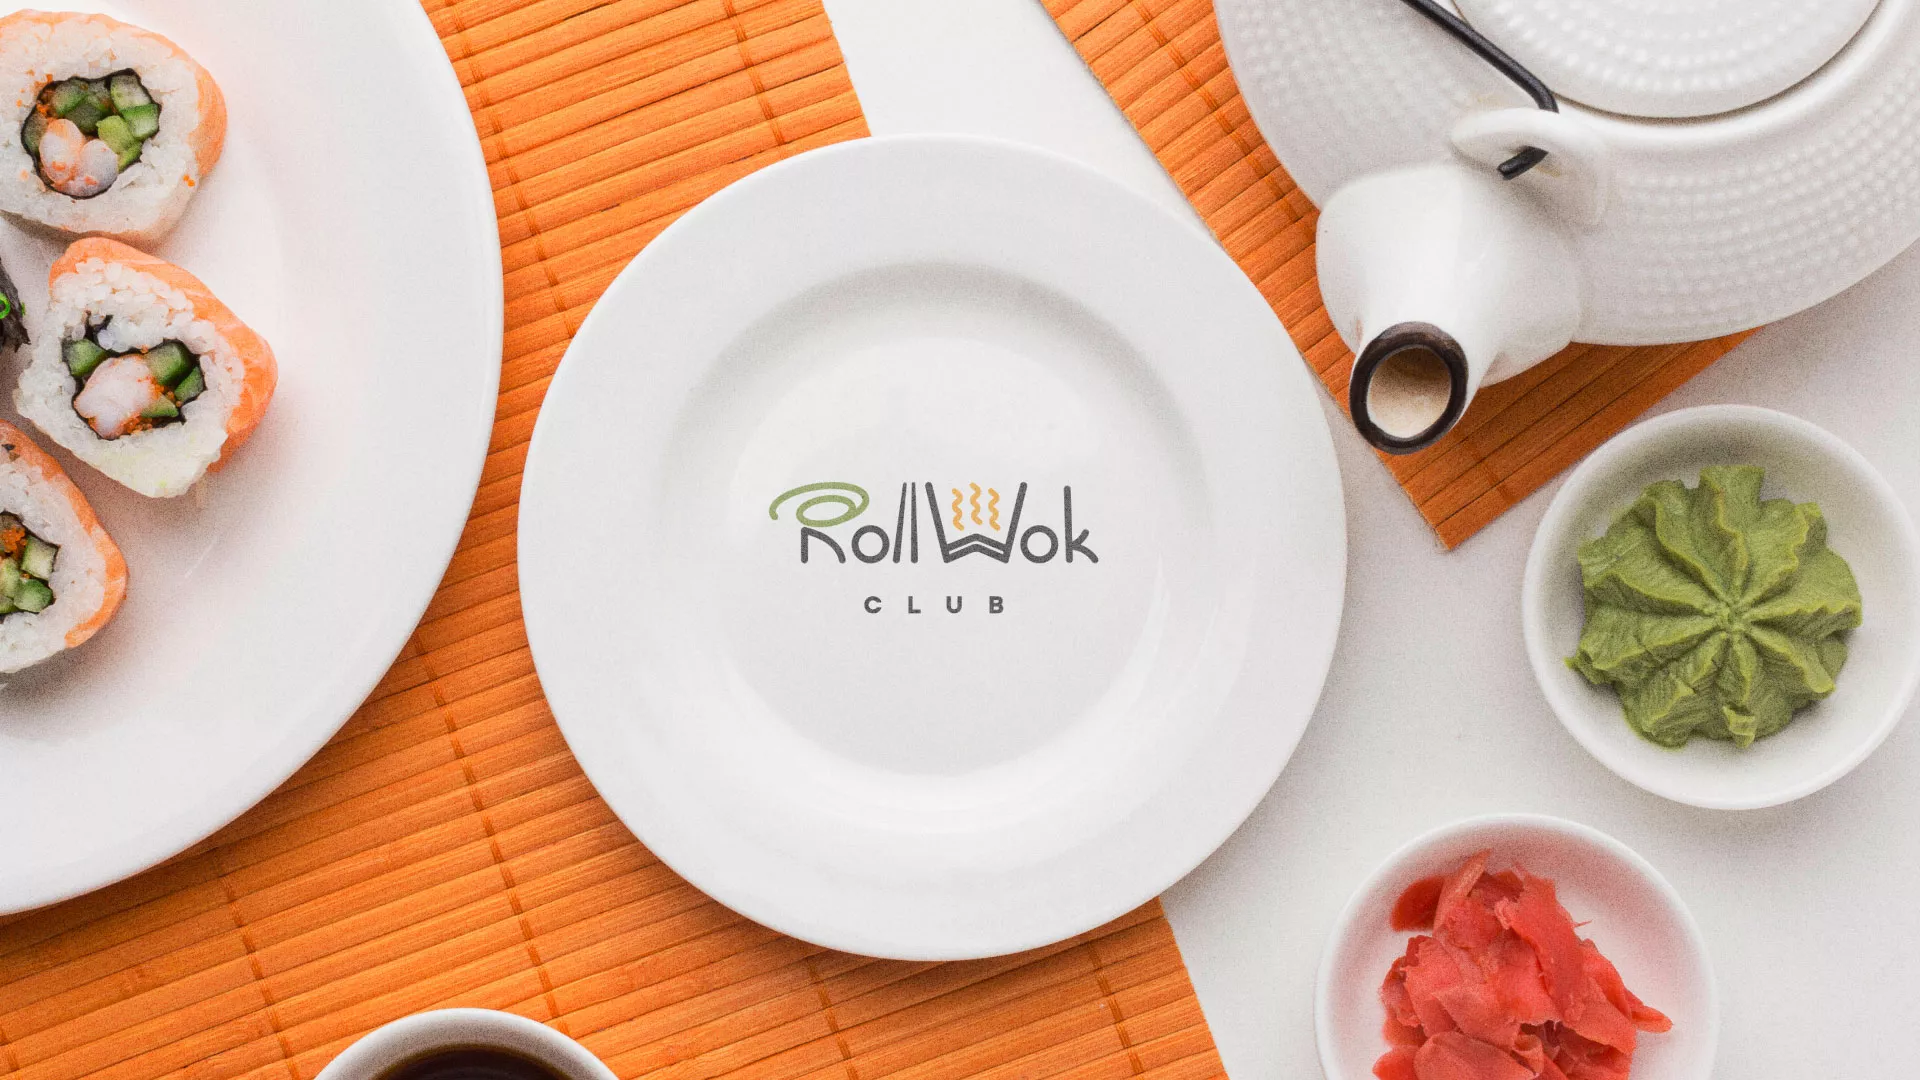 Разработка логотипа и фирменного стиля суши-бара «Roll Wok Club» в Андреаполе